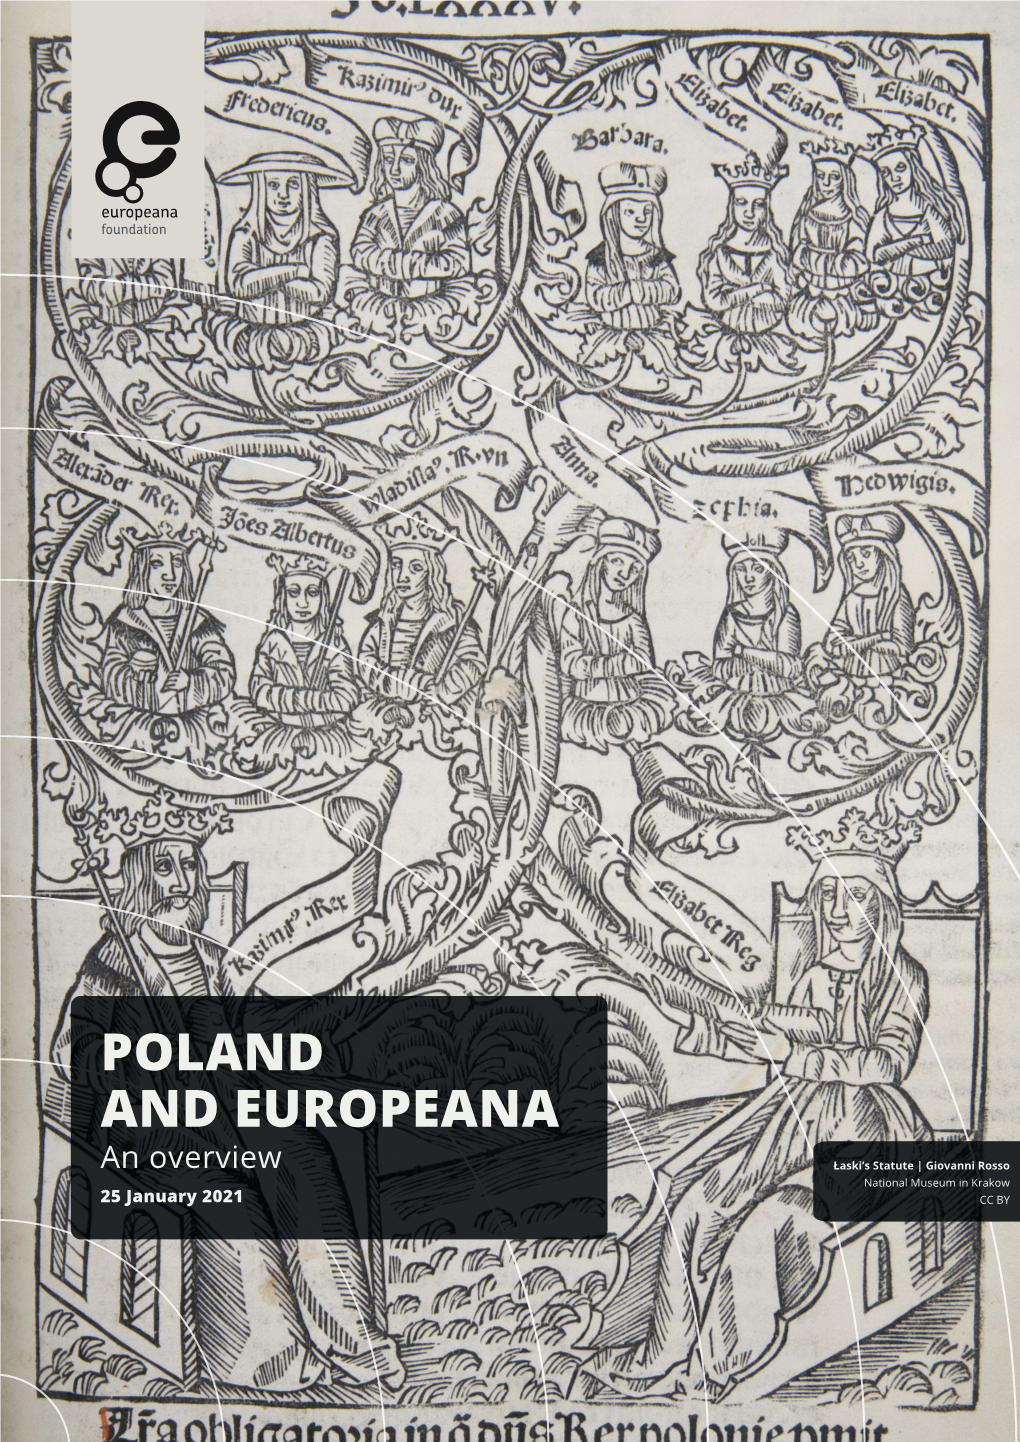 Poland and Europeana